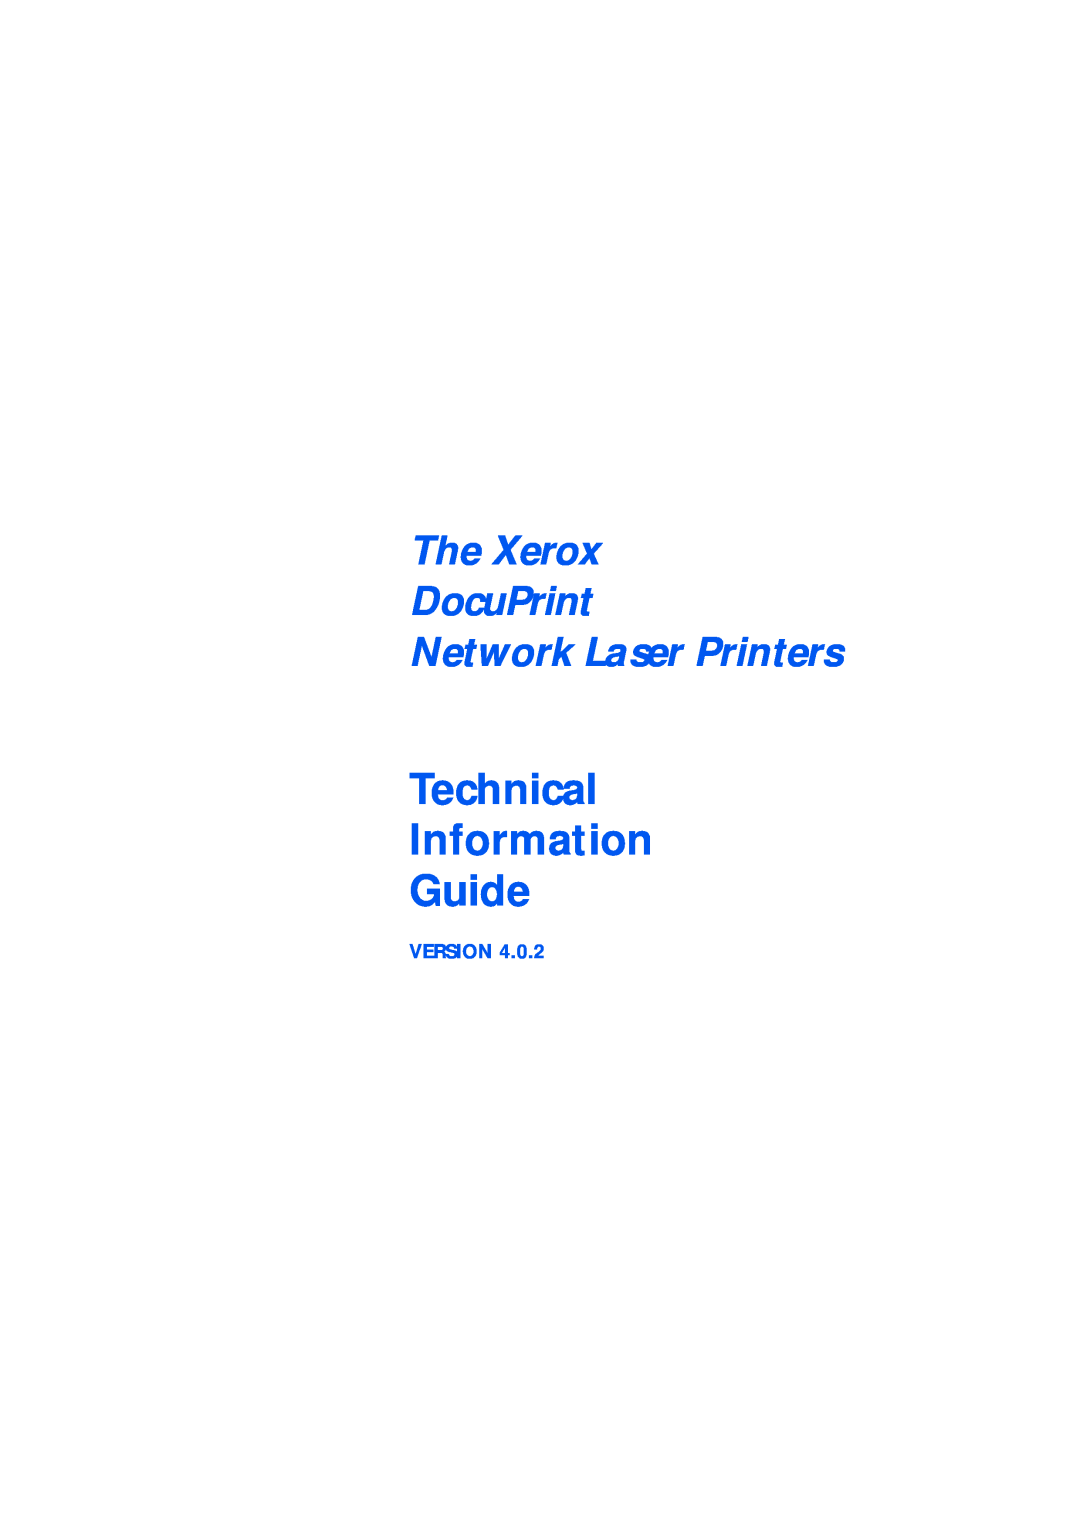 Xerox manual The Xerox DocuPrint Network Laser Printers, Technical Information Guide, Version 